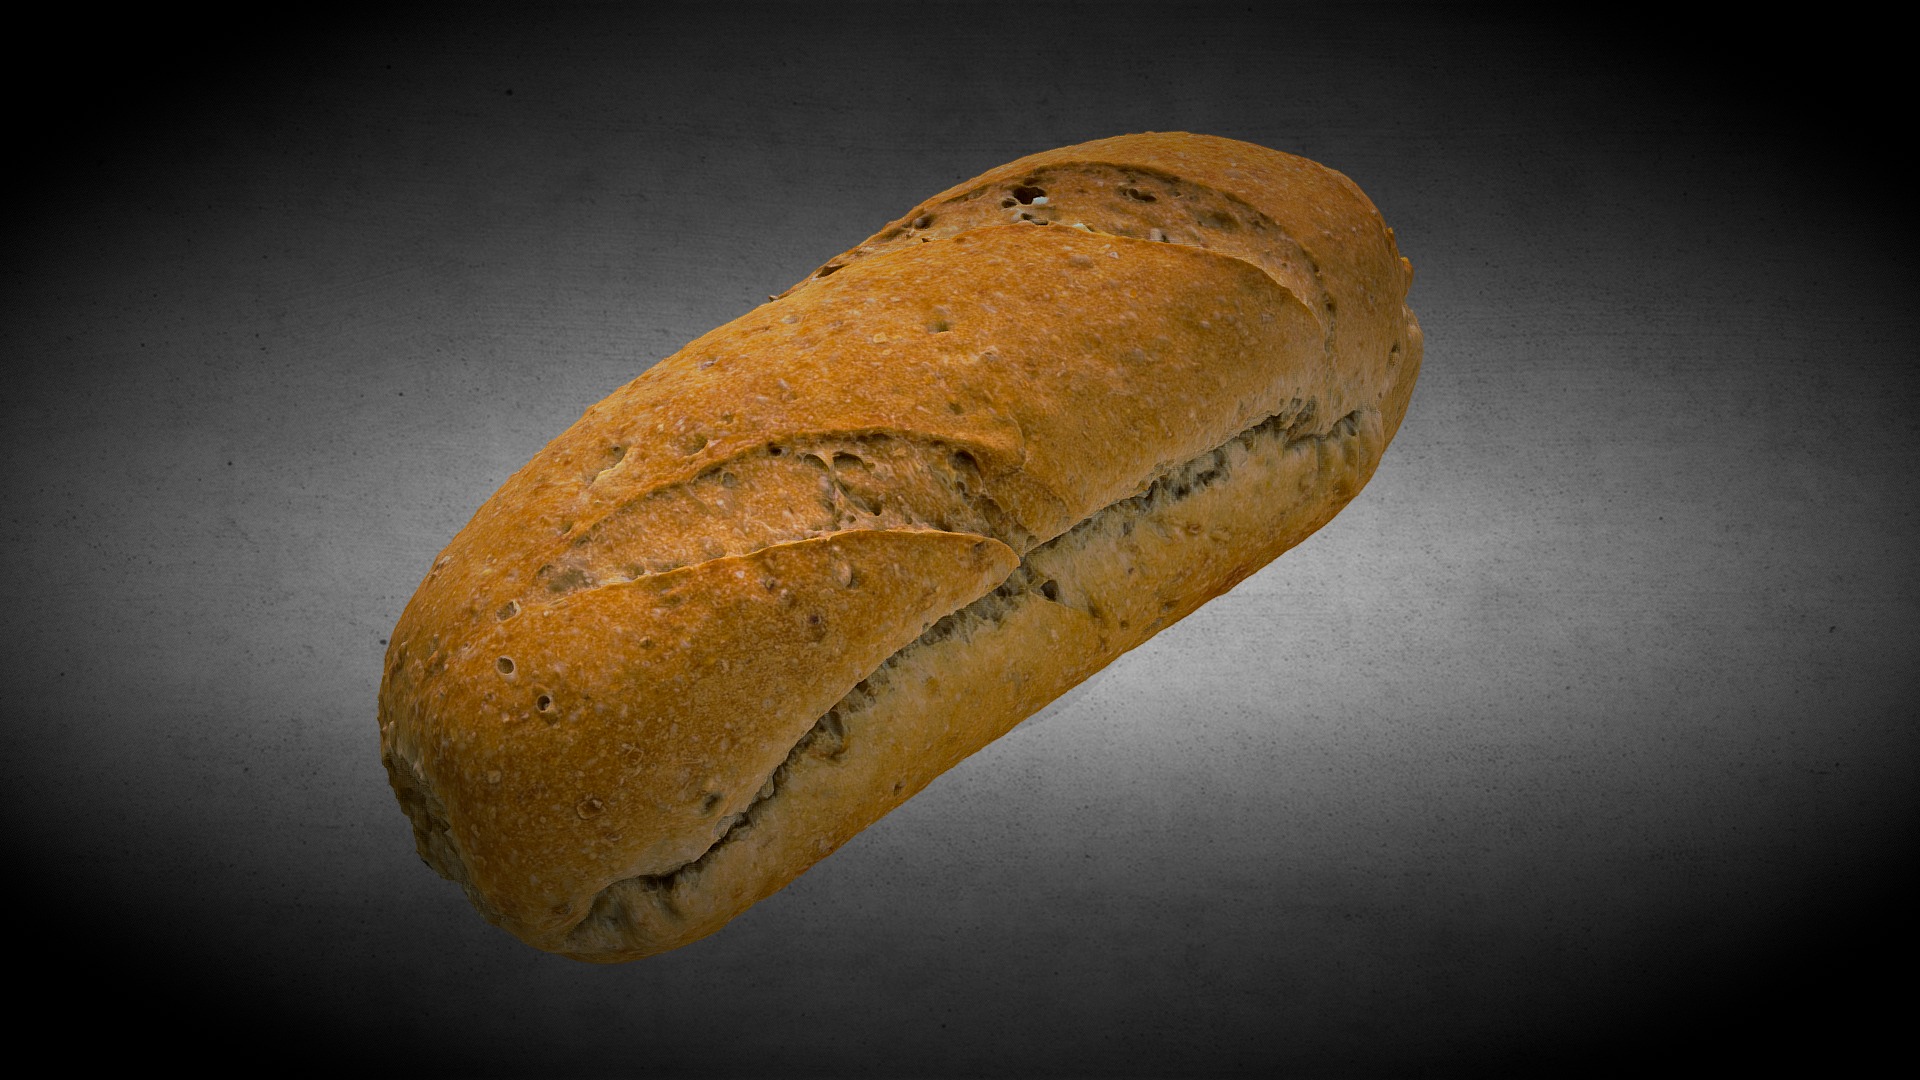 3D model 3d Food models/Bread_01 - This is a 3D model of the 3d Food models/Bread_01. The 3D model is about a potato on a black surface.